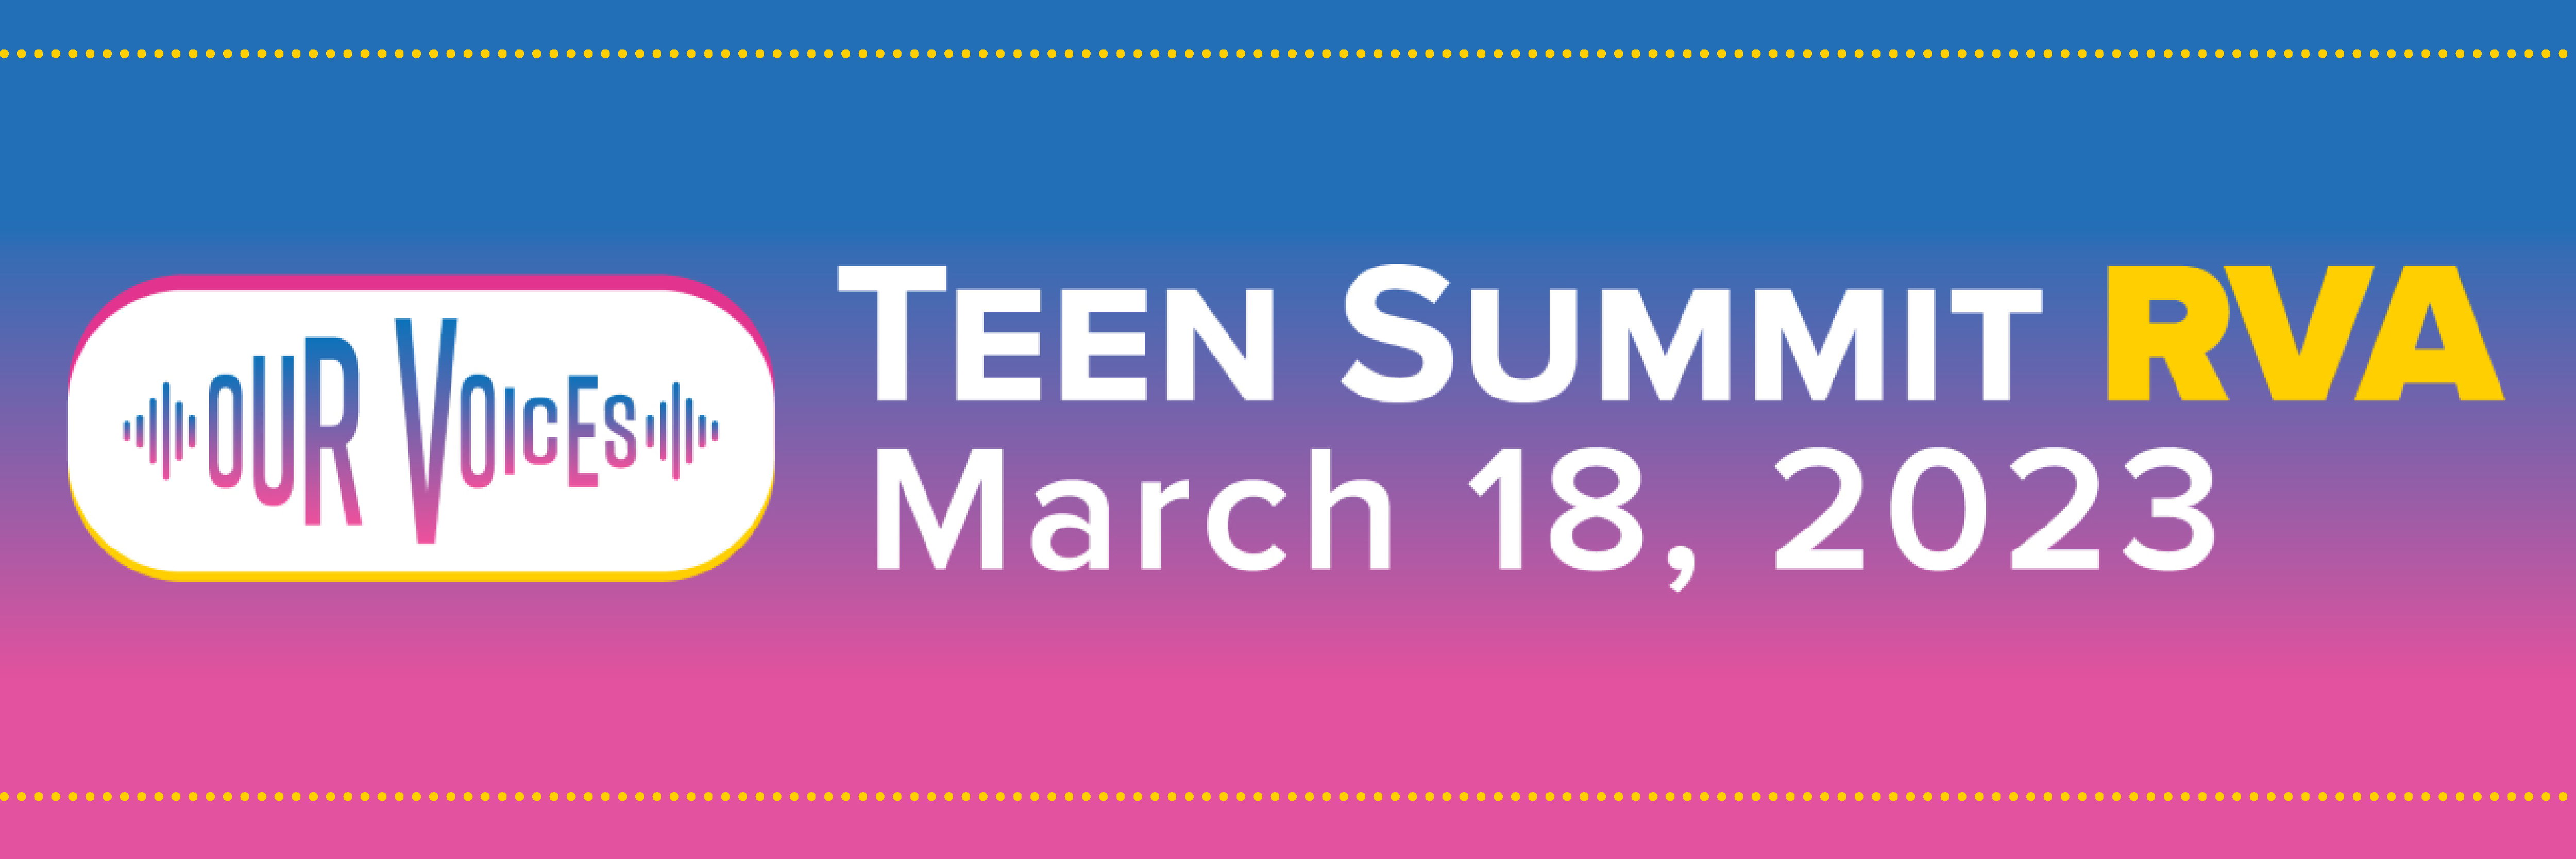 Teen Summit RVA: March 18, 2023